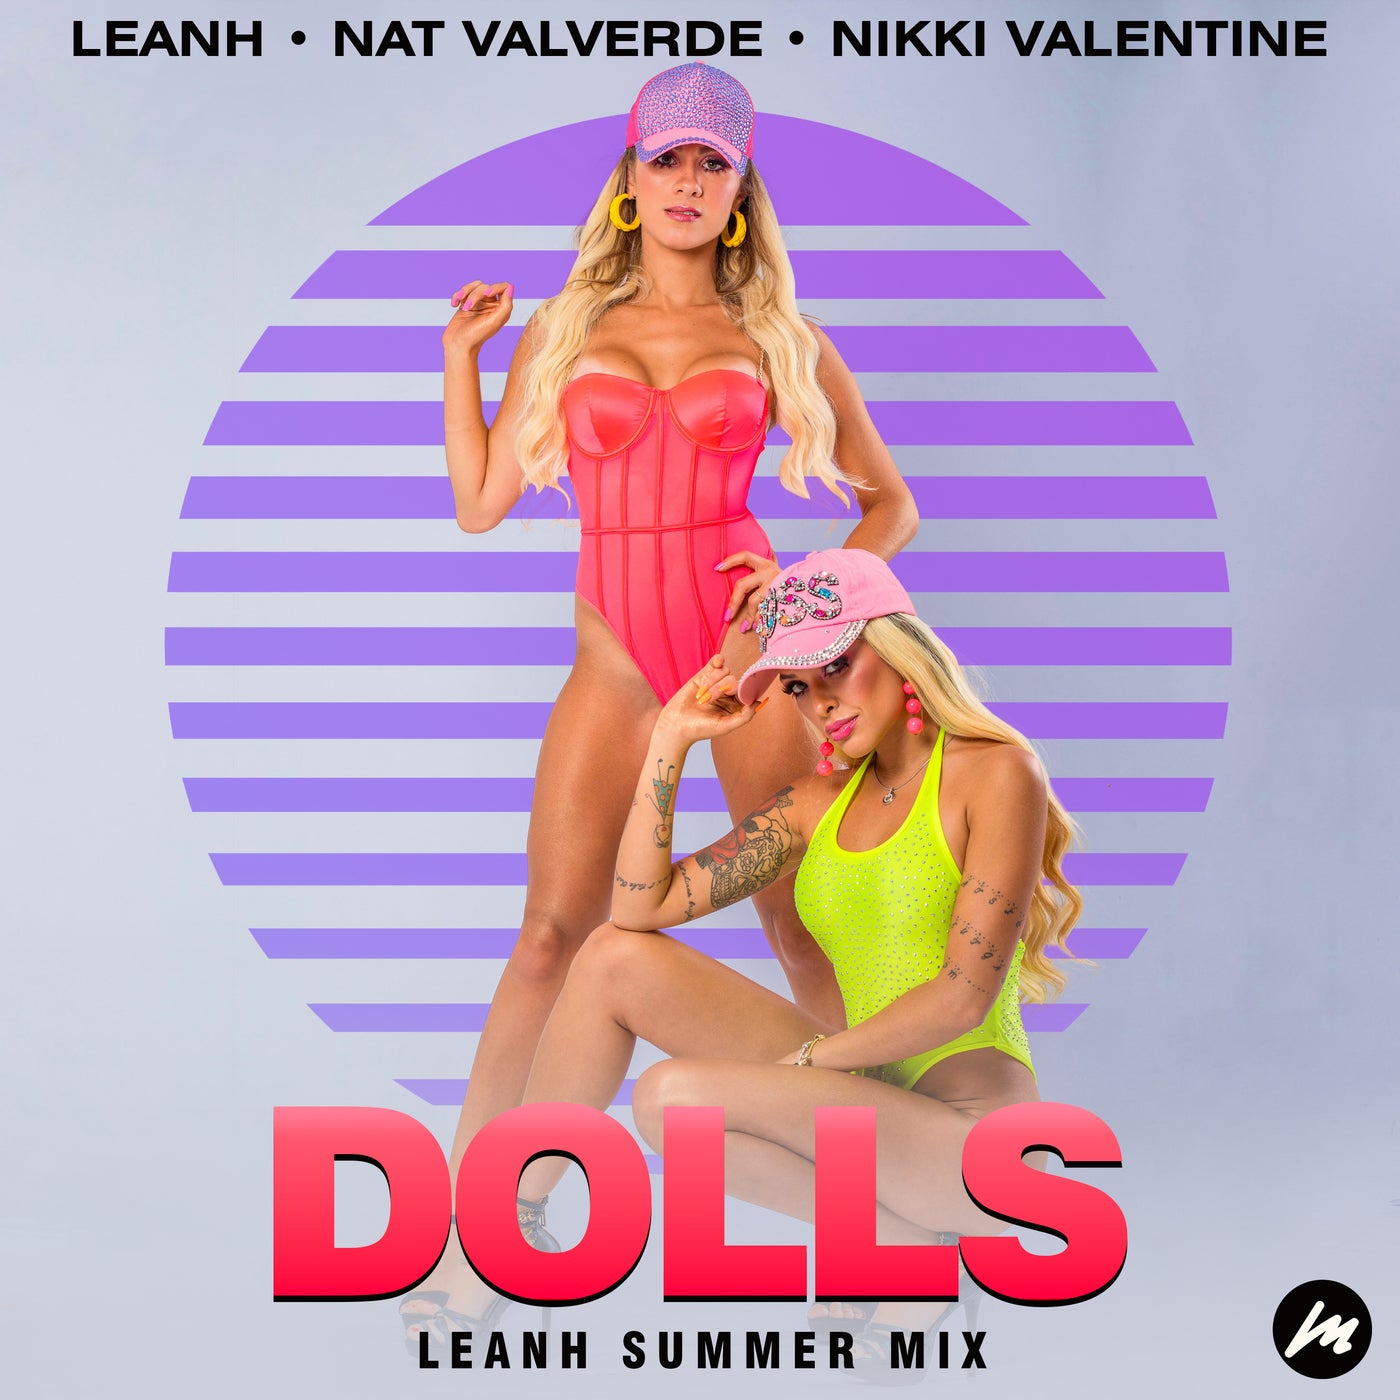 Dolls (Leanh Summer Mix)